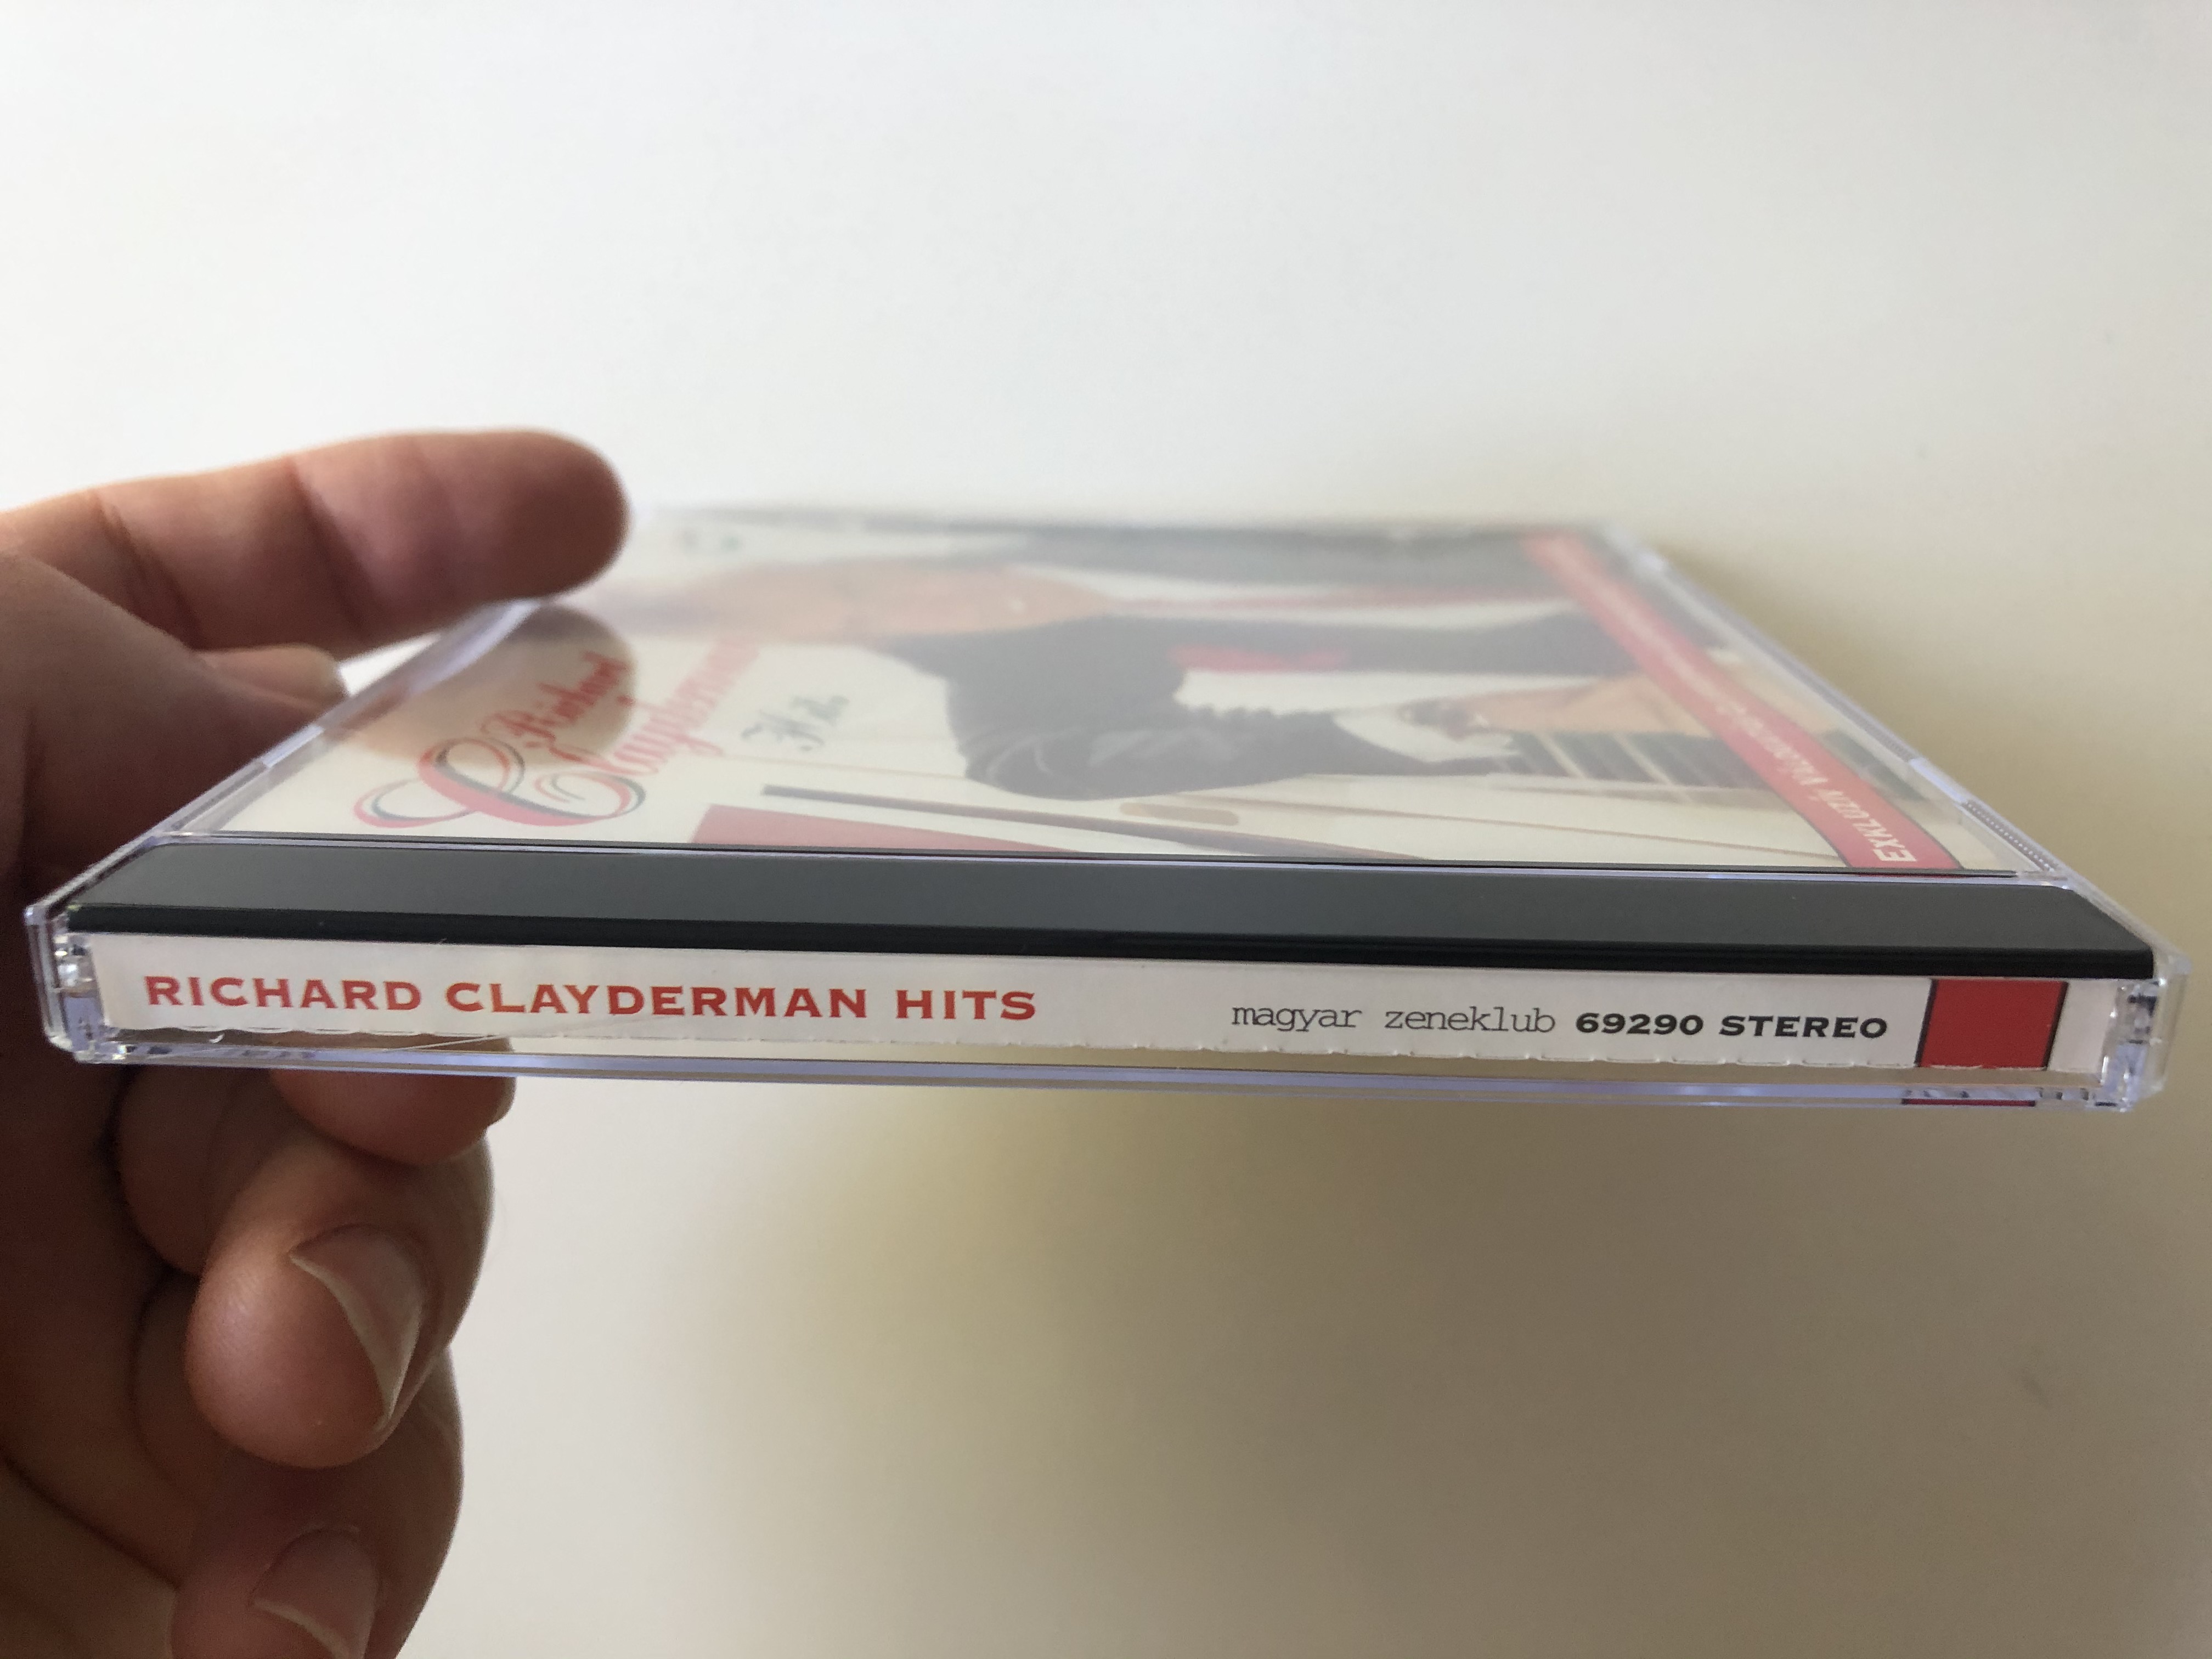 richard-clayderman-hits-exkluziv-valogatas-clayderman-legnepszerubb-felveteleibol-magyar-zeneklub-audio-cd-1995-stereo-69290-5-.jpg